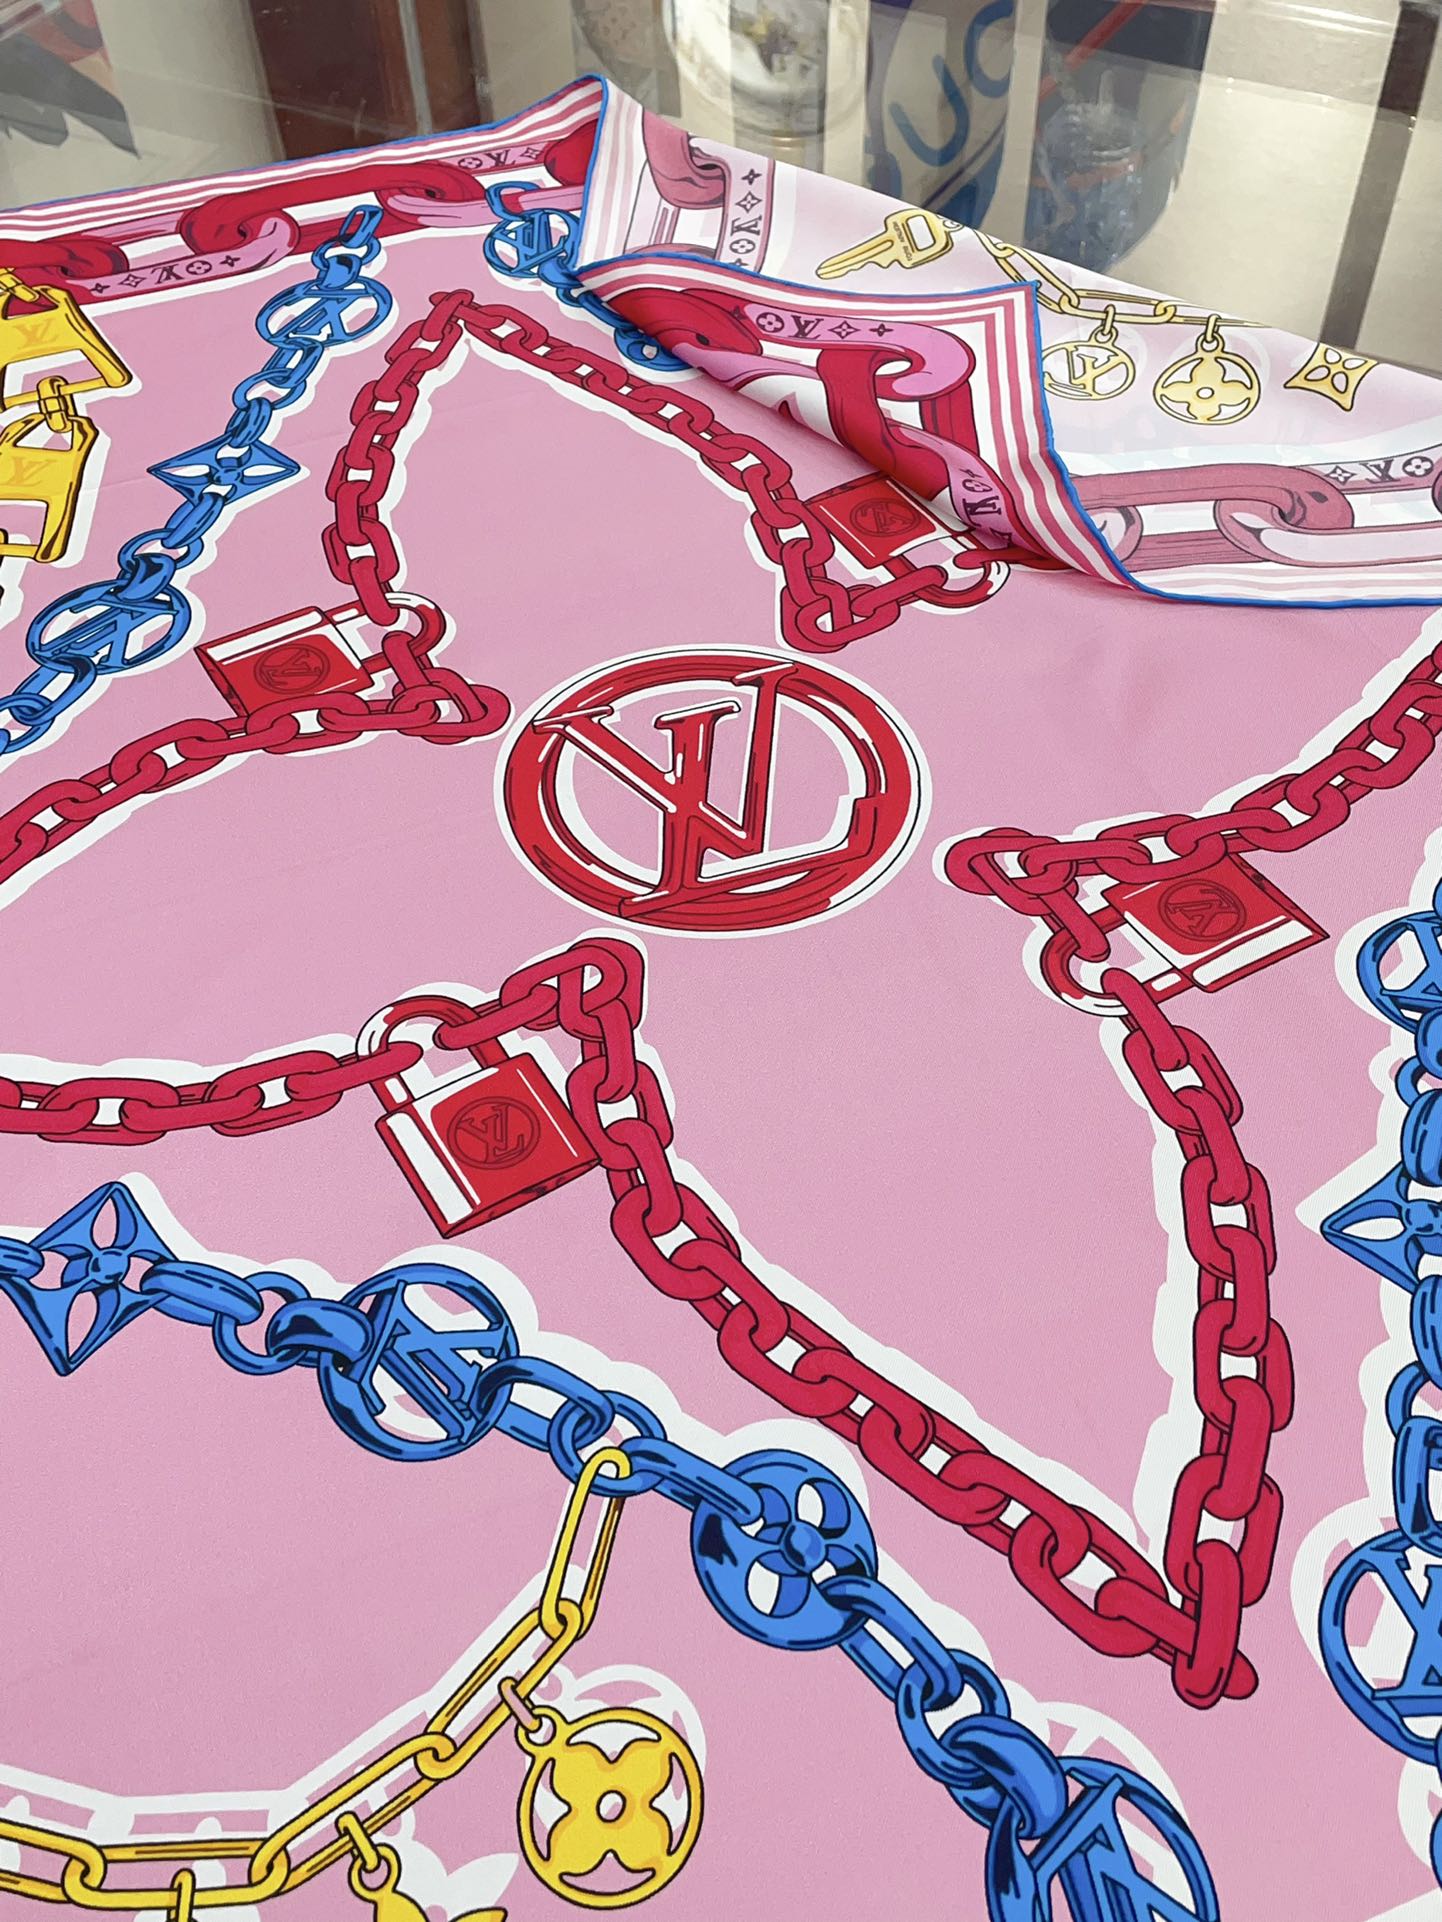 LV最新上架本款Bejeweled90方巾以彩绘图案展露品牌艺术气质绚烂链带挂饰和锁扣成就瞩目之姿致意路